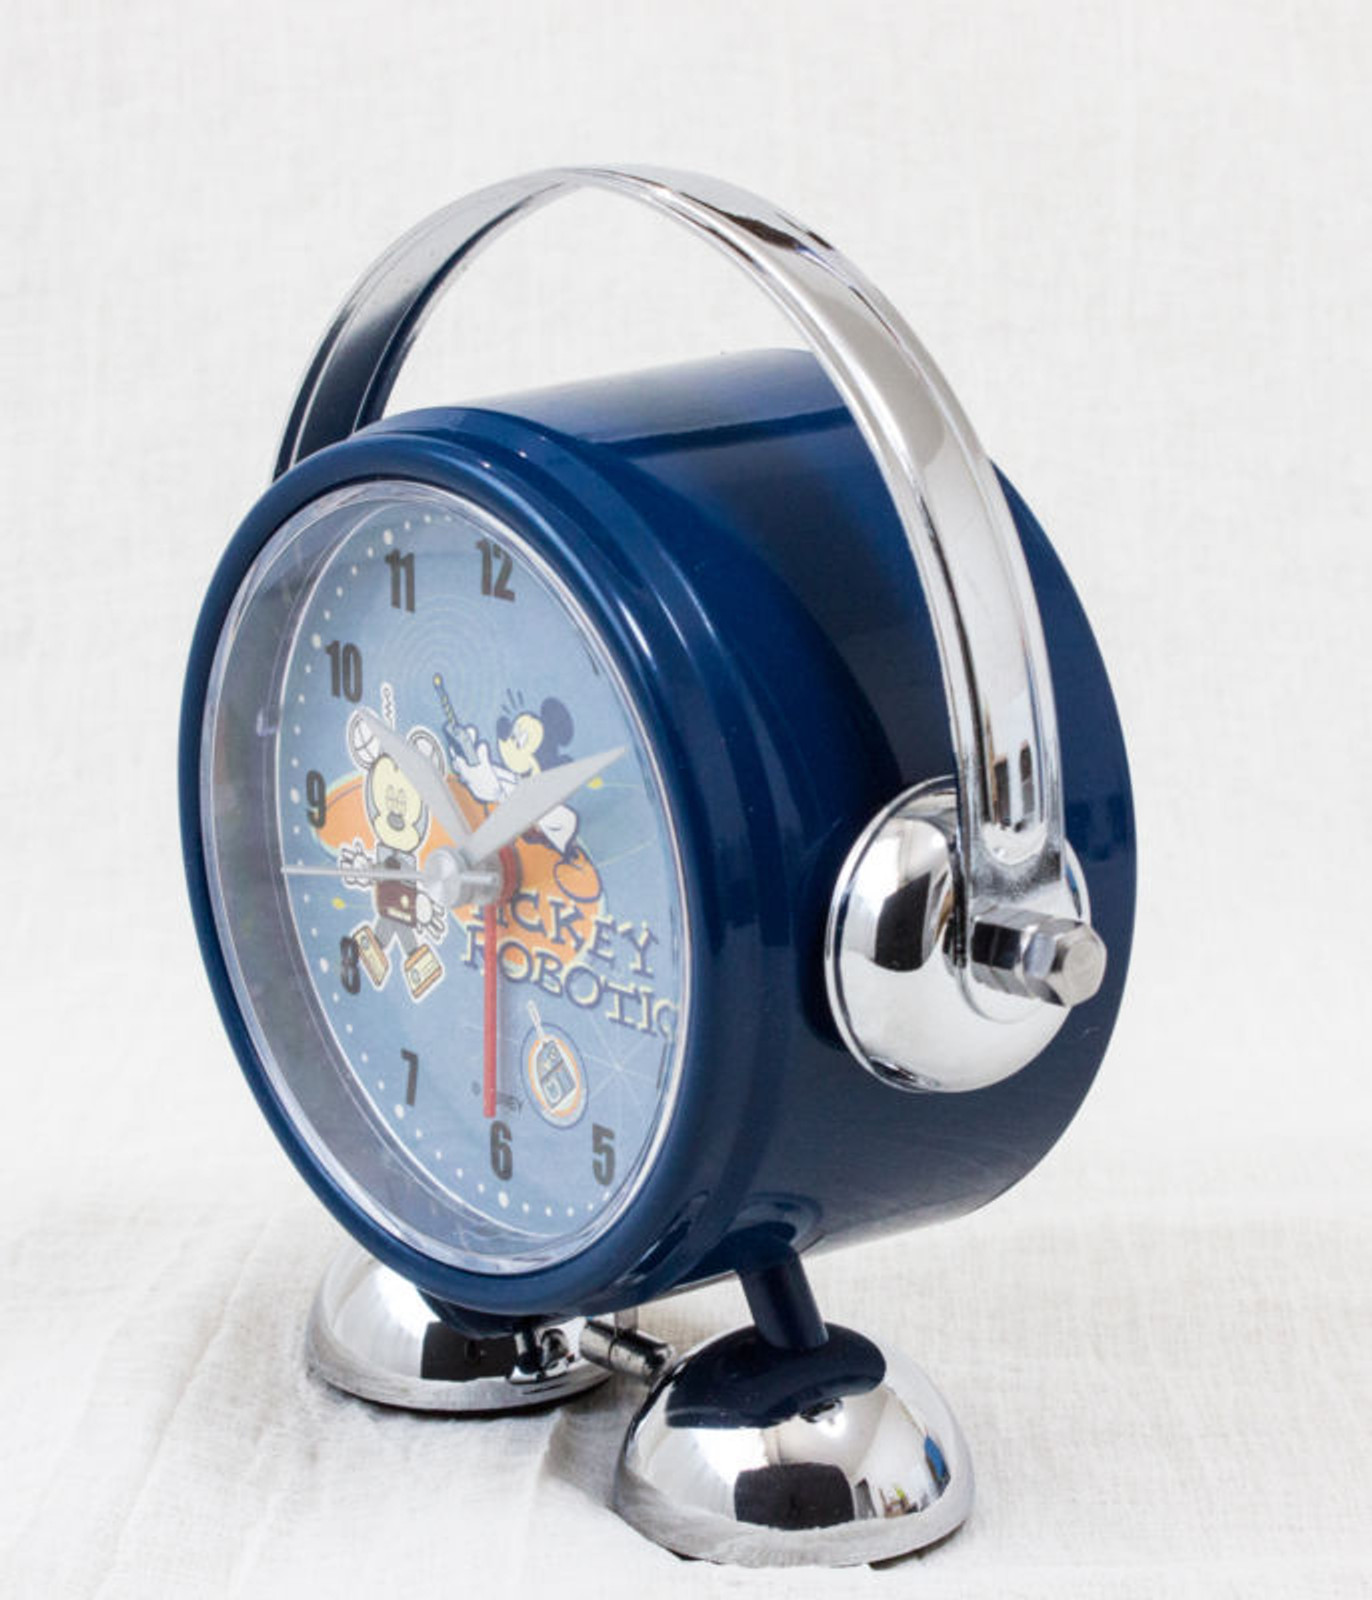 Disney Mickey Robotics System Alarm Clock 2001 Time Concepts Mickey Mouse